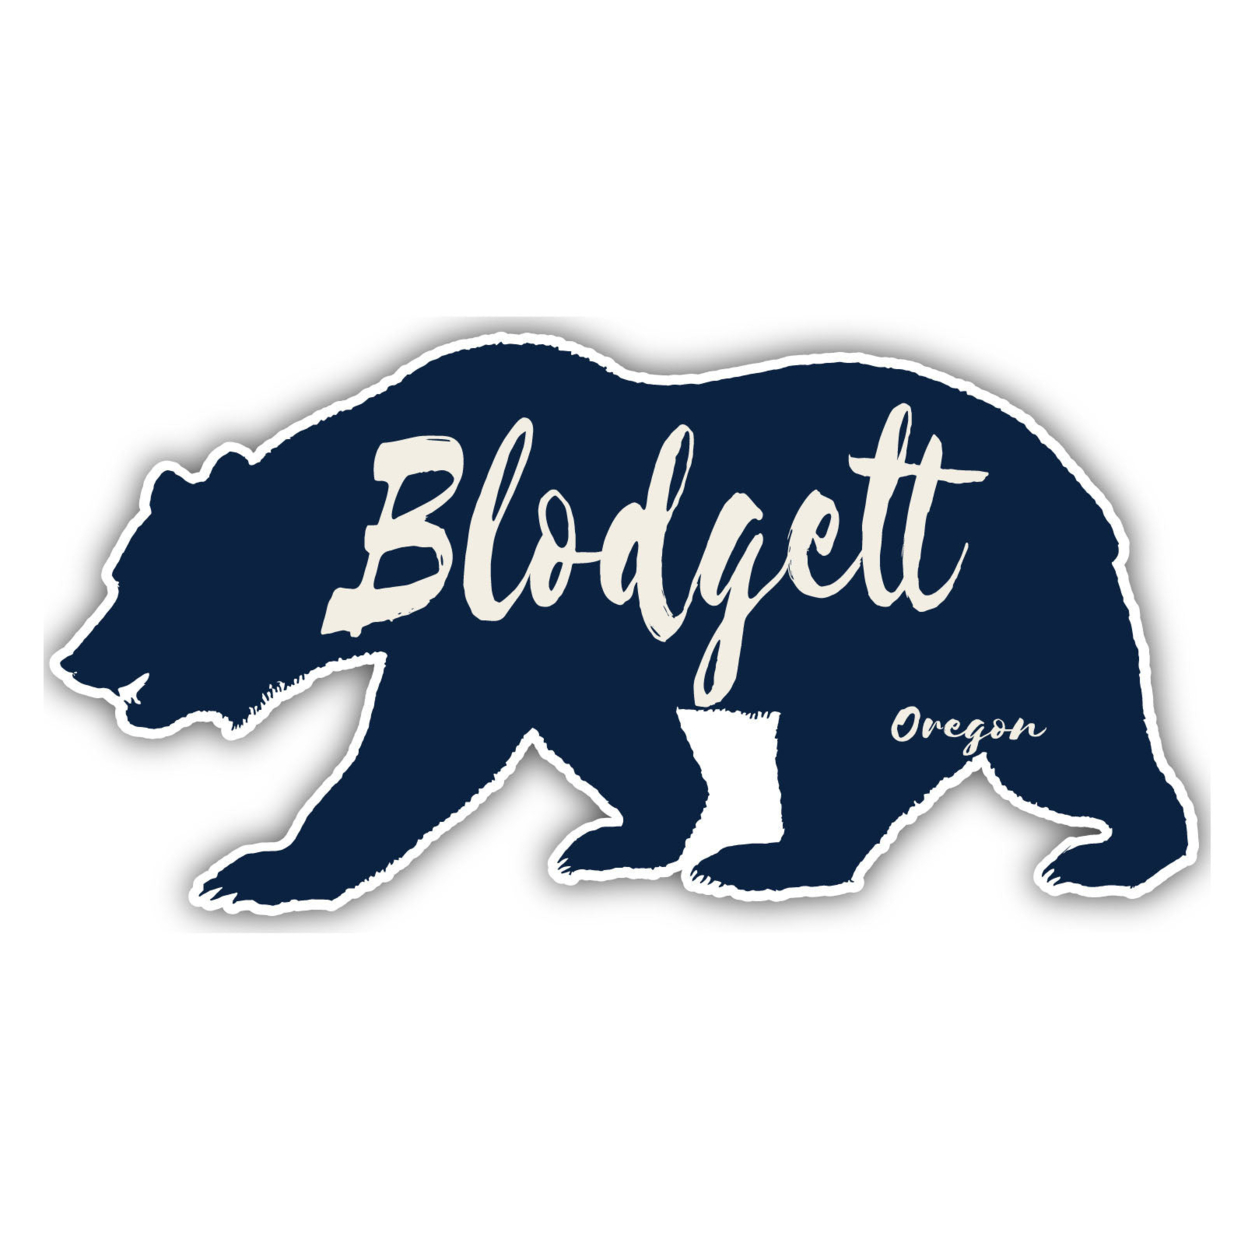 Blodgett Oregon Souvenir Decorative Stickers (Choose Theme And Size) - Single Unit, 2-Inch, Bear